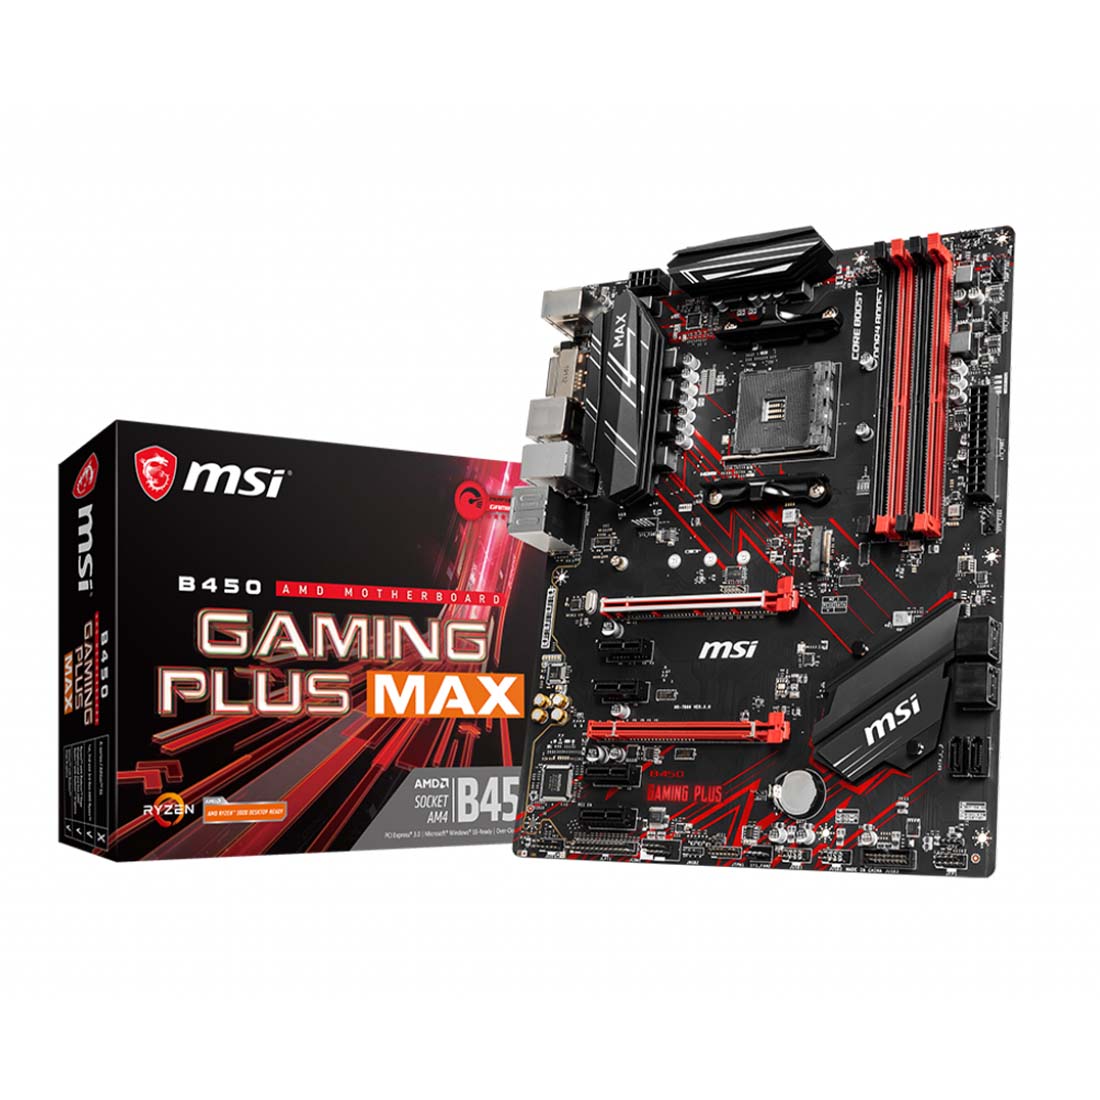 MSI B450 गेमिंग प्लस MAX AM4 सॉकेट डुअल चैनल DDR4 USB 3.2 ATX मदरबोर्ड